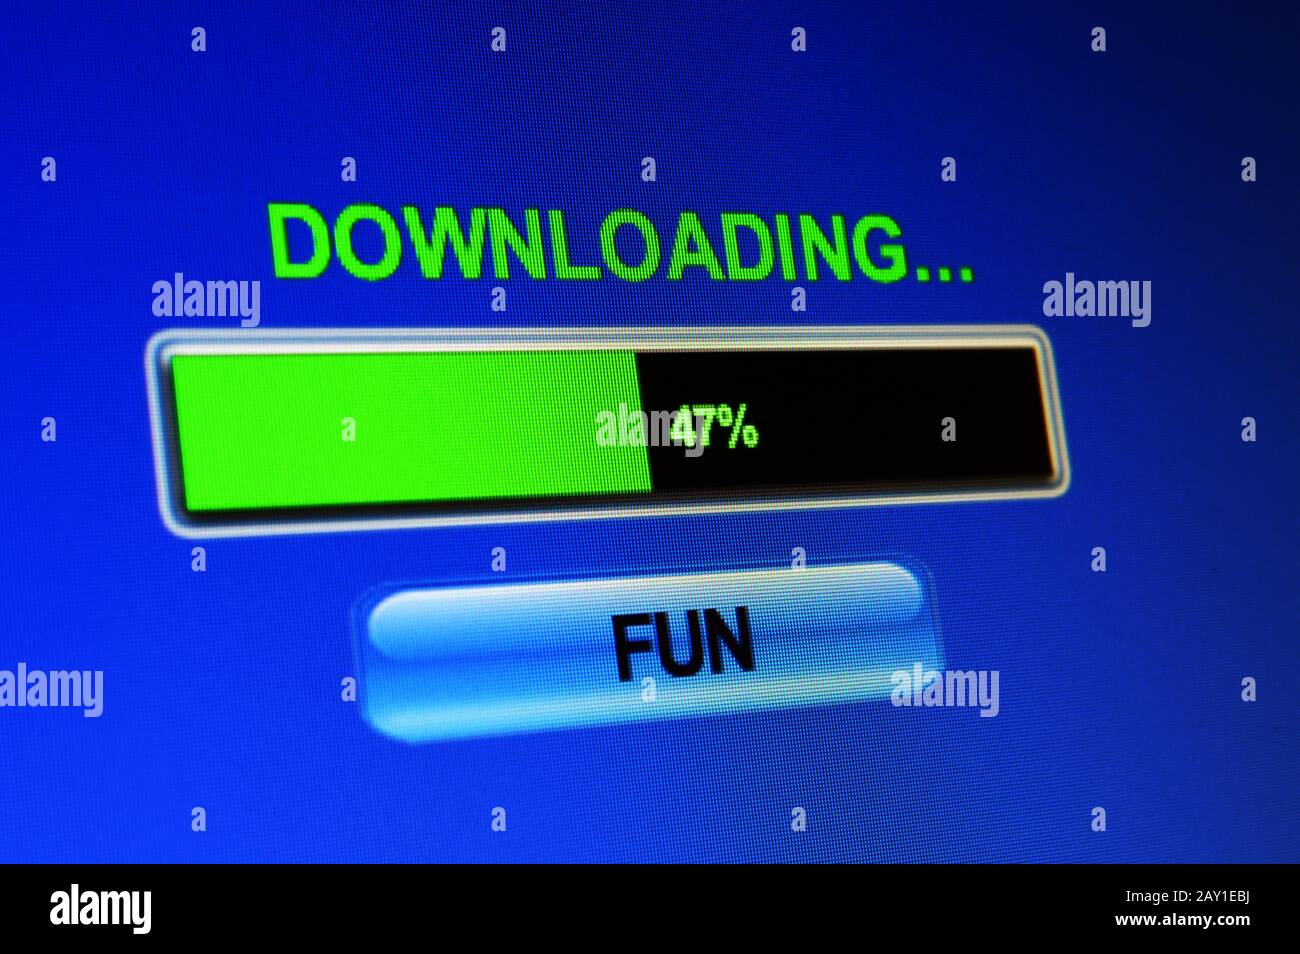 Downloading fun Stock Photo